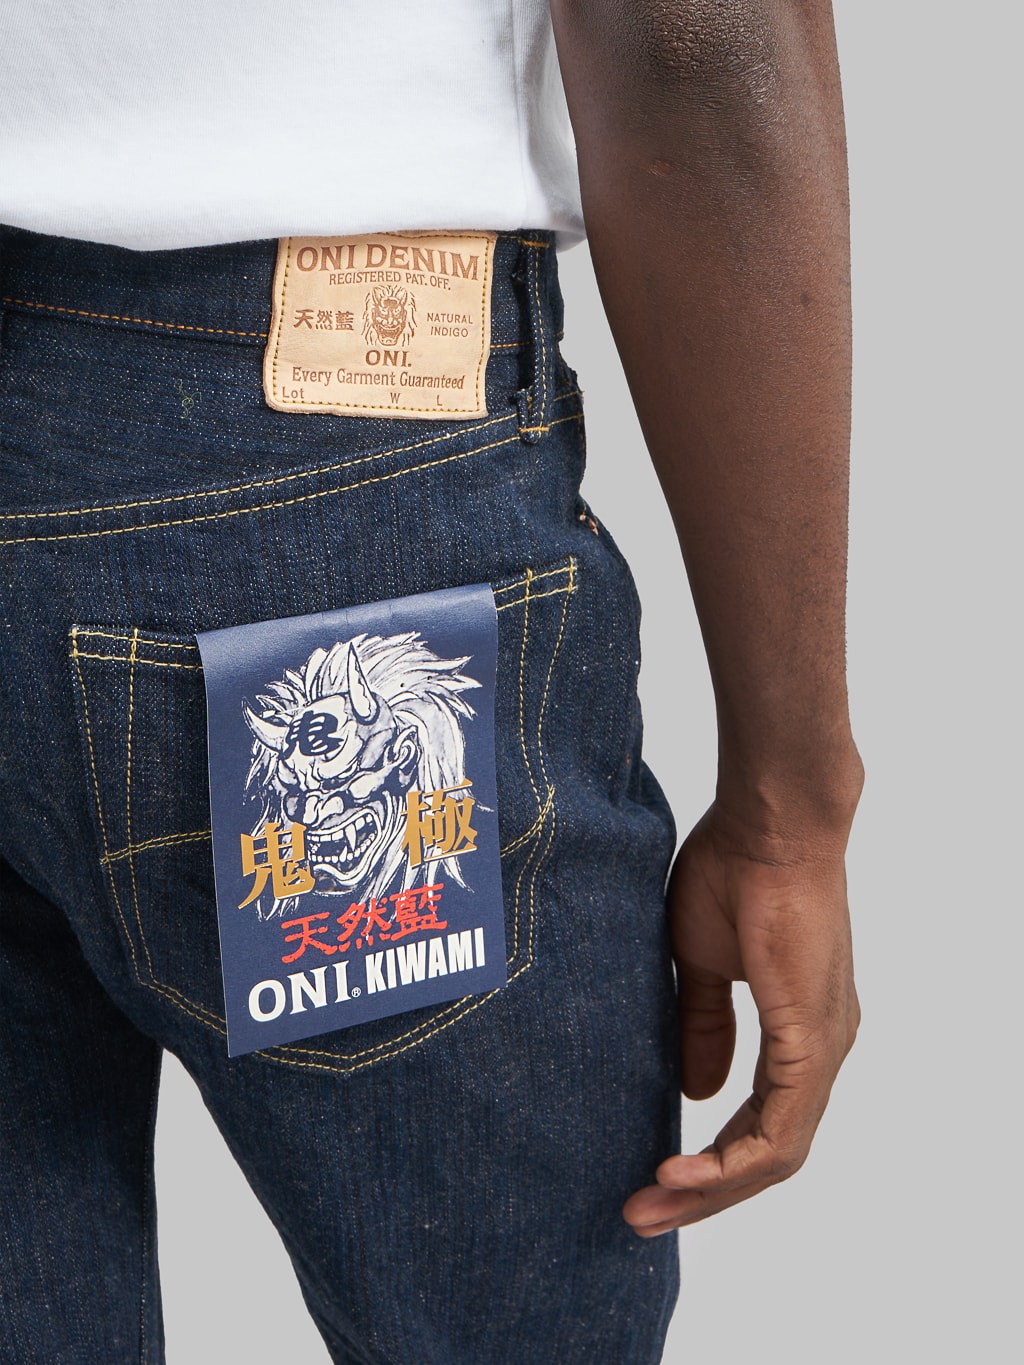 Oni denim kiwami indigo regular selvedge jeans flasher pocket